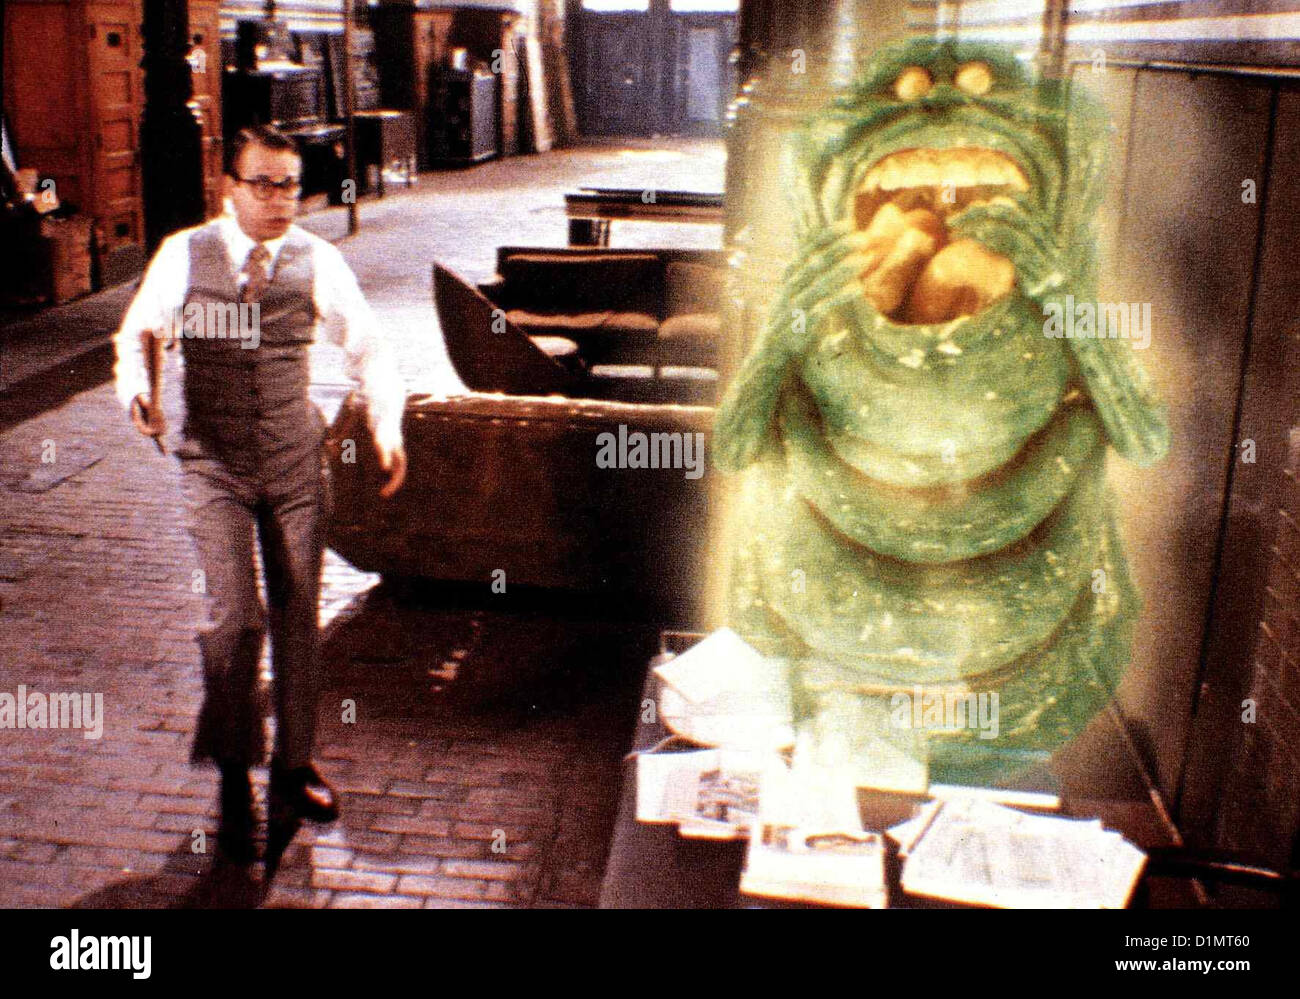 Ghostbusters 2  Ghostbusters Ii.  Rick Moranis Als in New York wieder Geister auftauchen, geht Louis Tully (Rick Moranis) mit Stock Photo